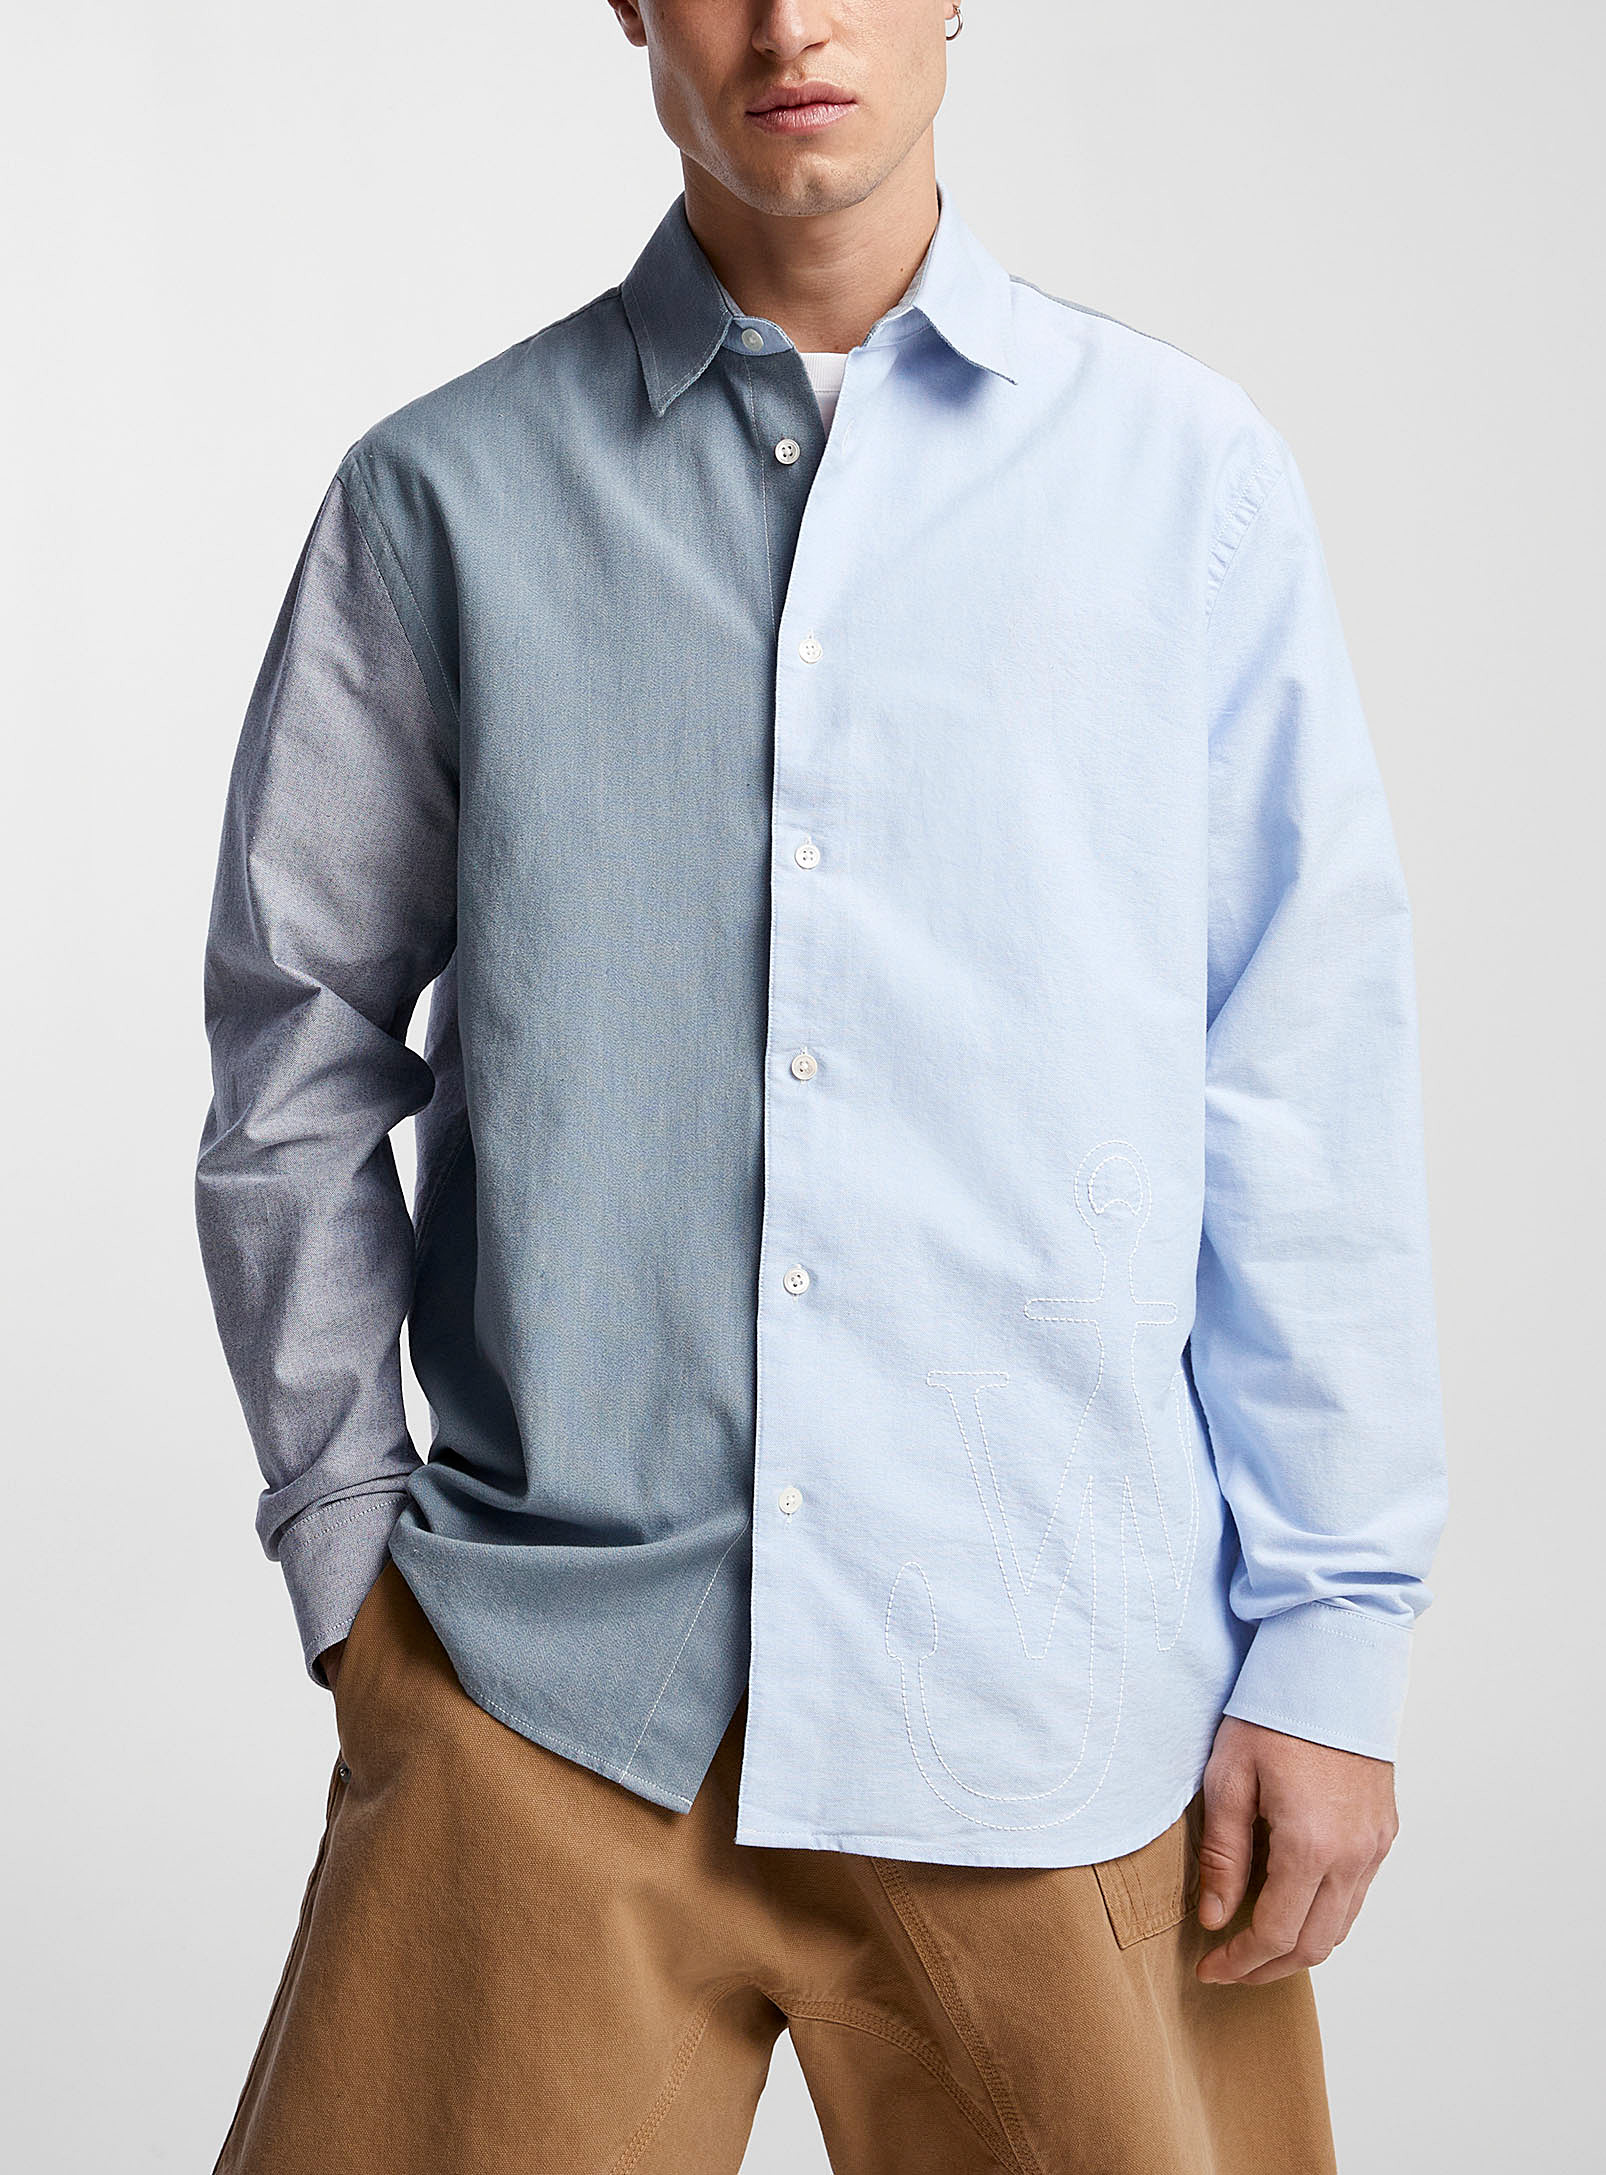 JW Anderson - La chemise oxford assemblage patchwork